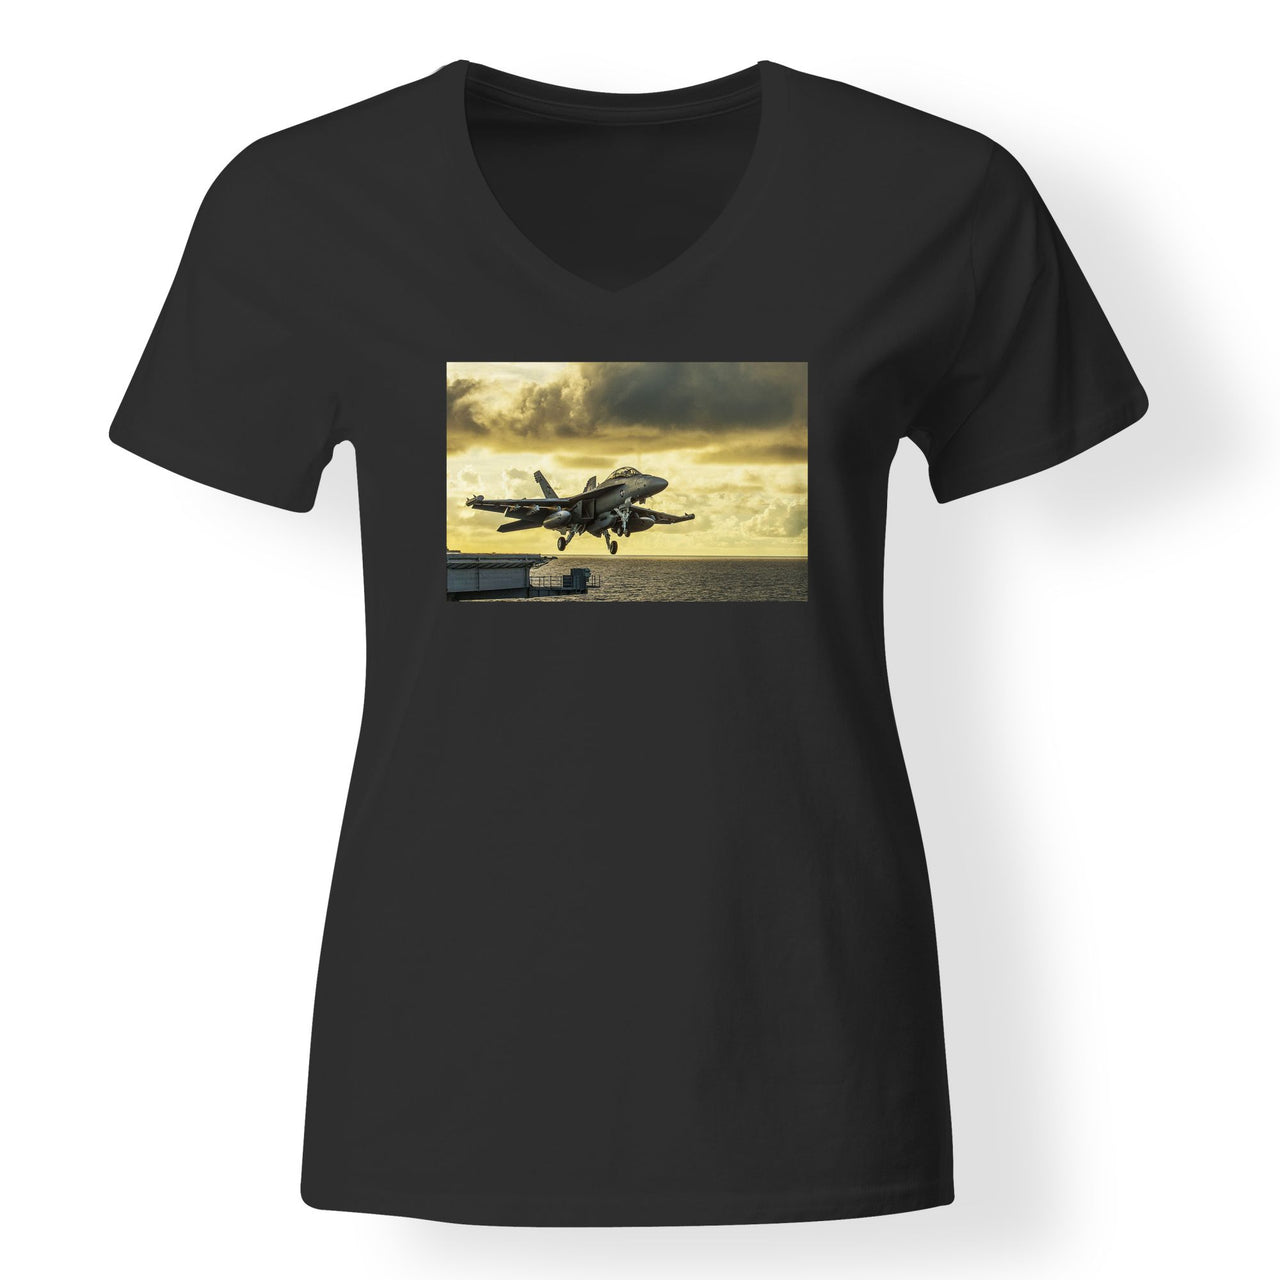 Departing Jet Aircraft Designed V-Neck T-Shirts